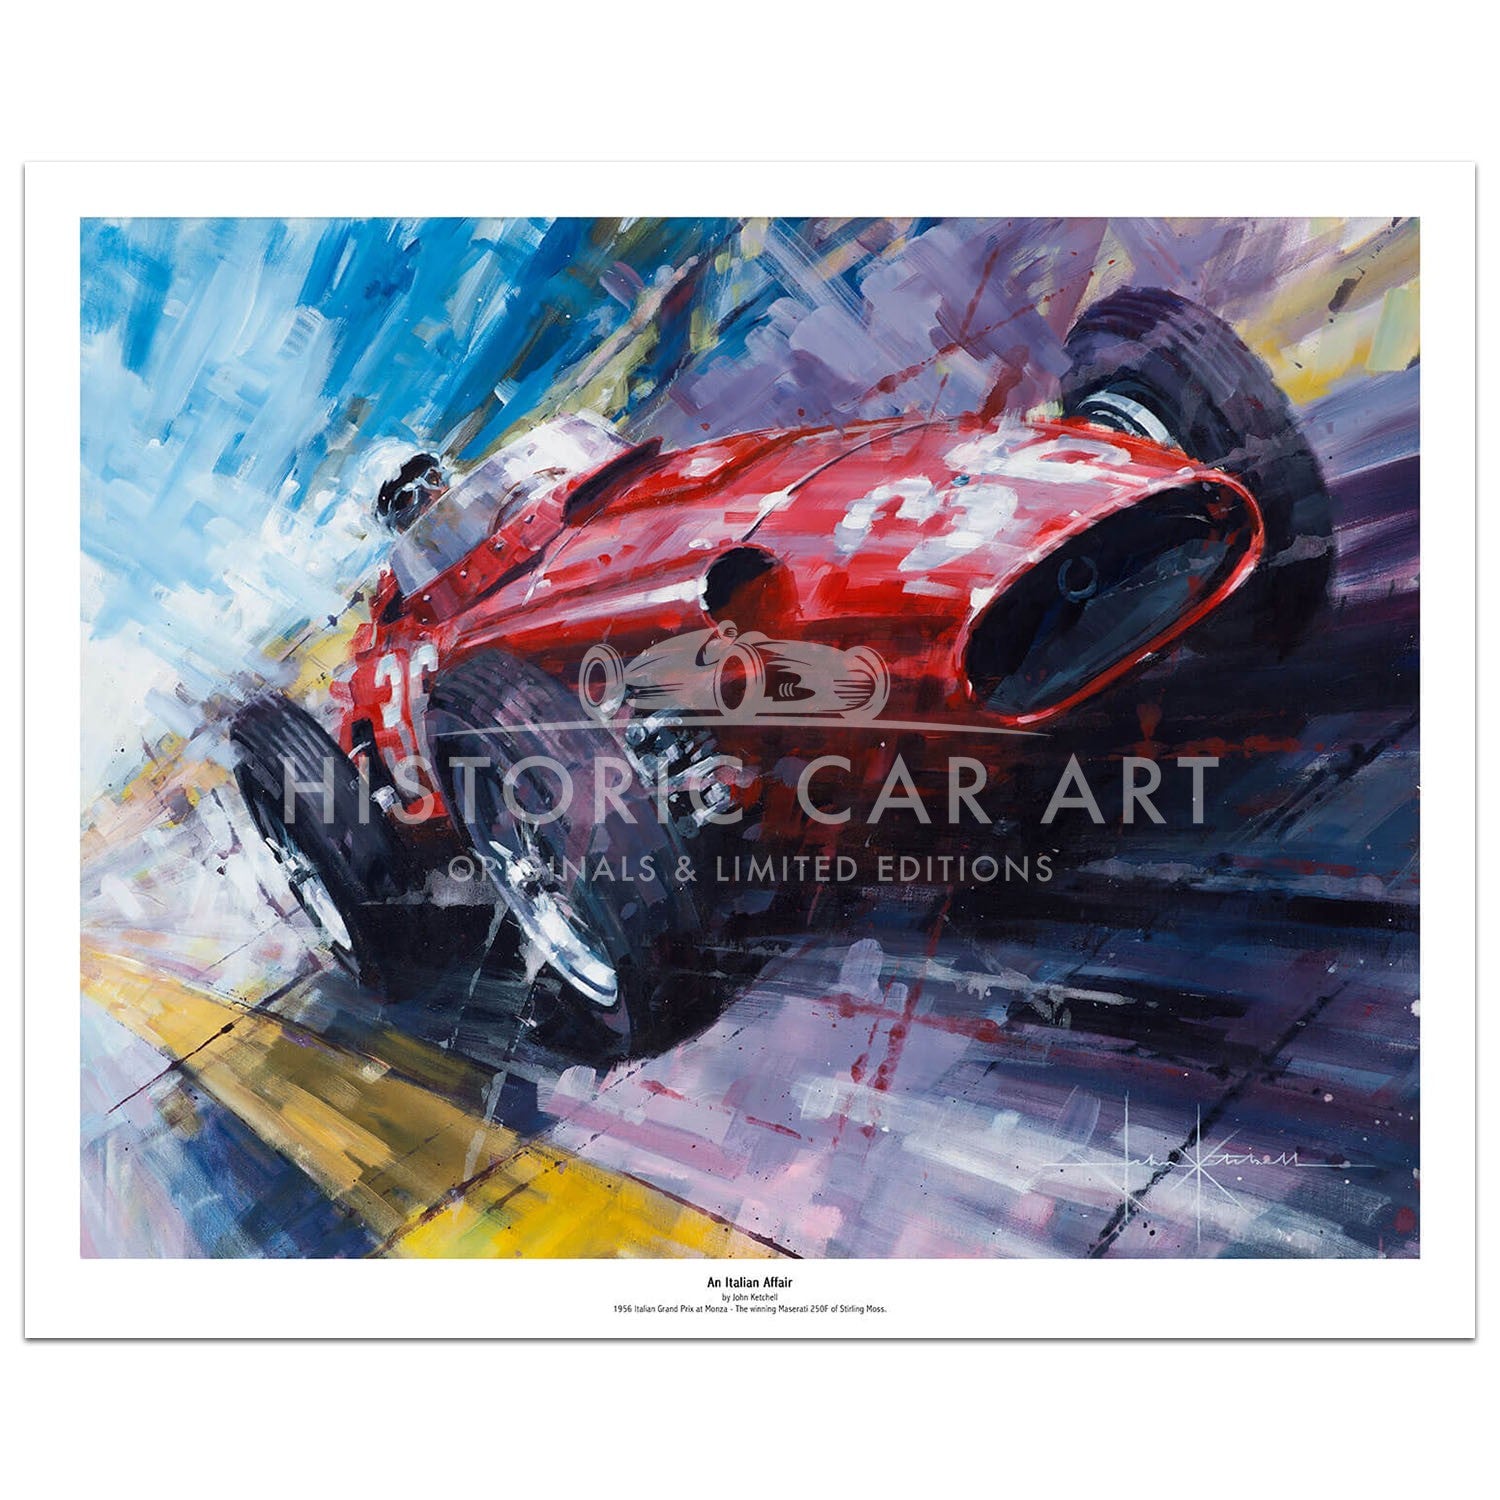 An Italian Affair | Stirling Moss | Maserati | Print